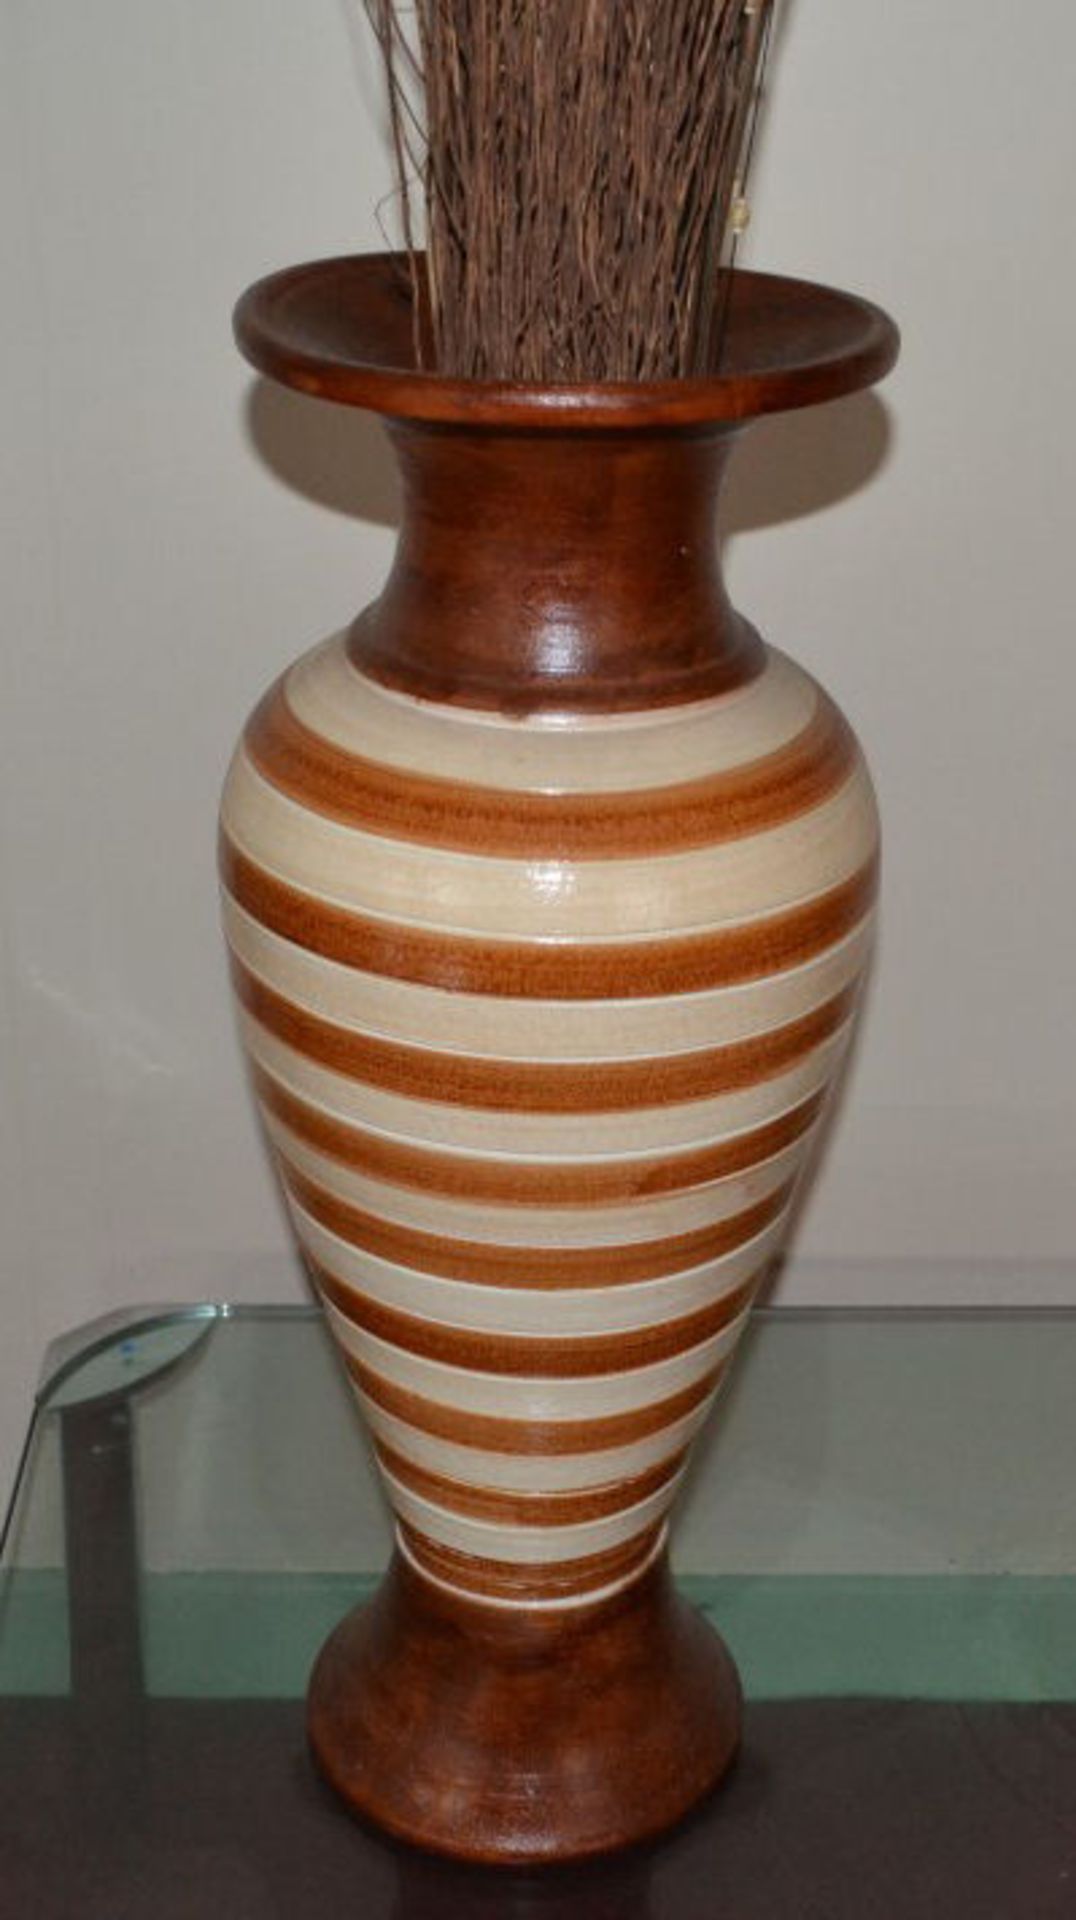 5 Assorted Decorative Vases - See Description For Details - Image 14 of 19